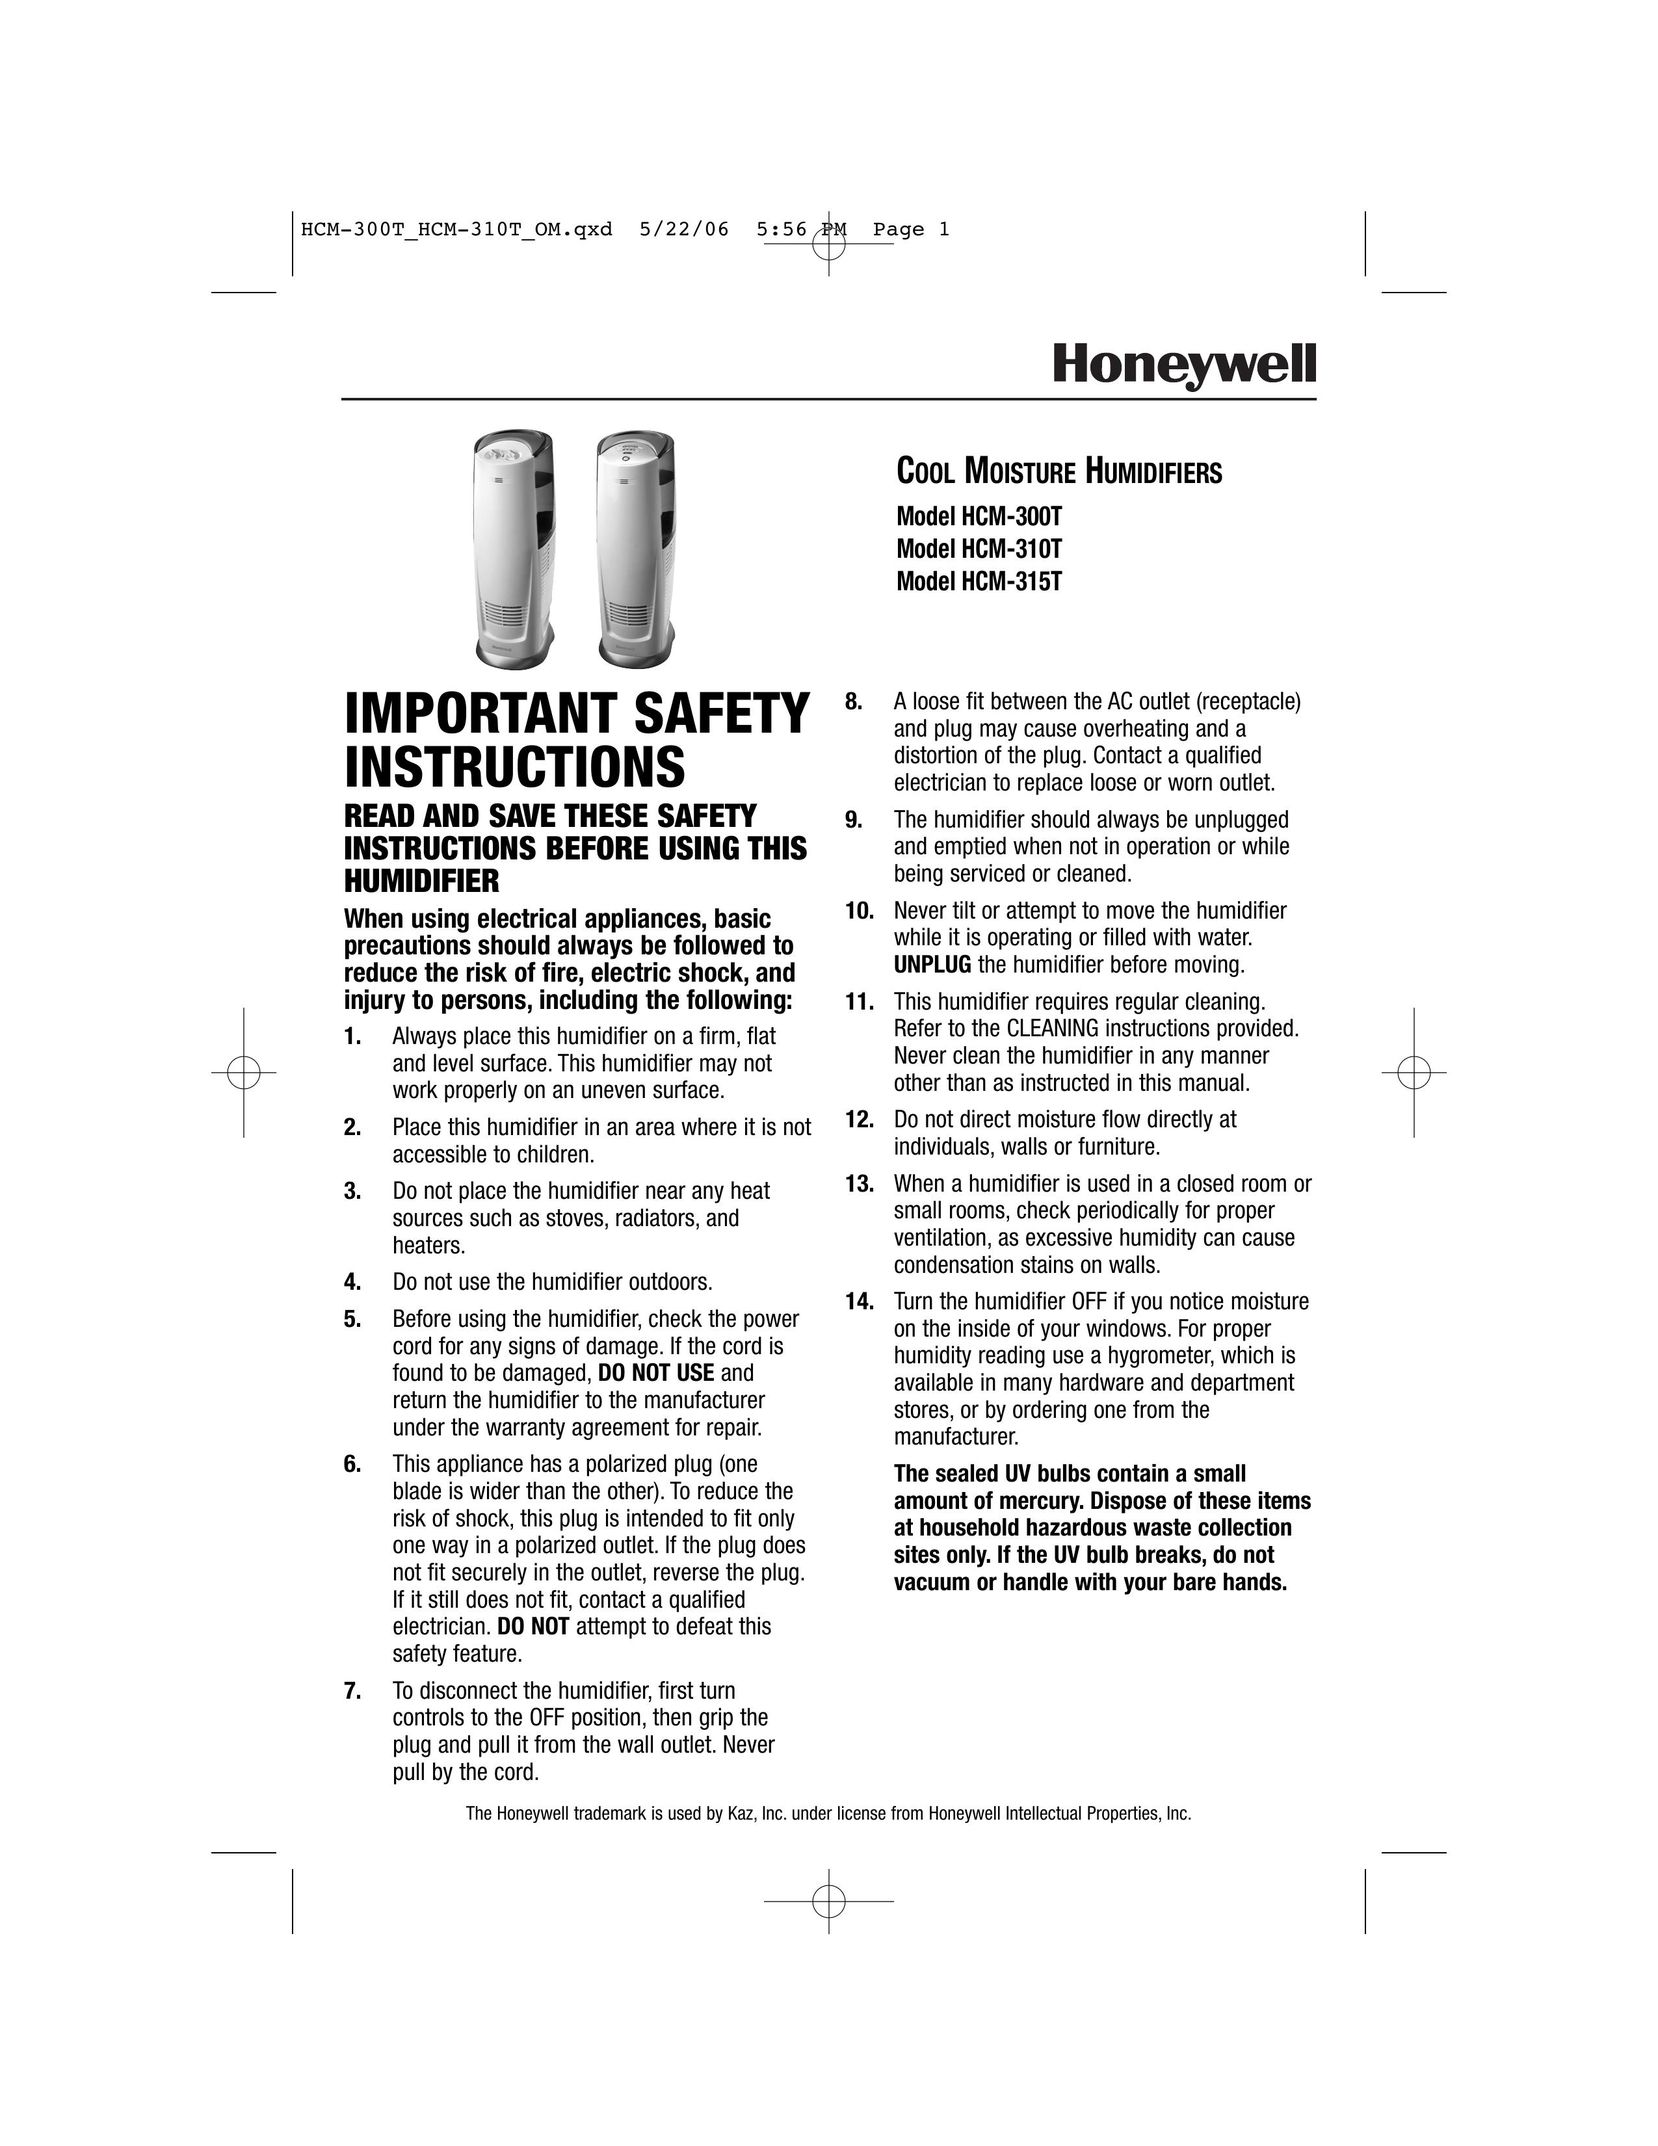 Honeywell HCM-315T Humidifier User Manual